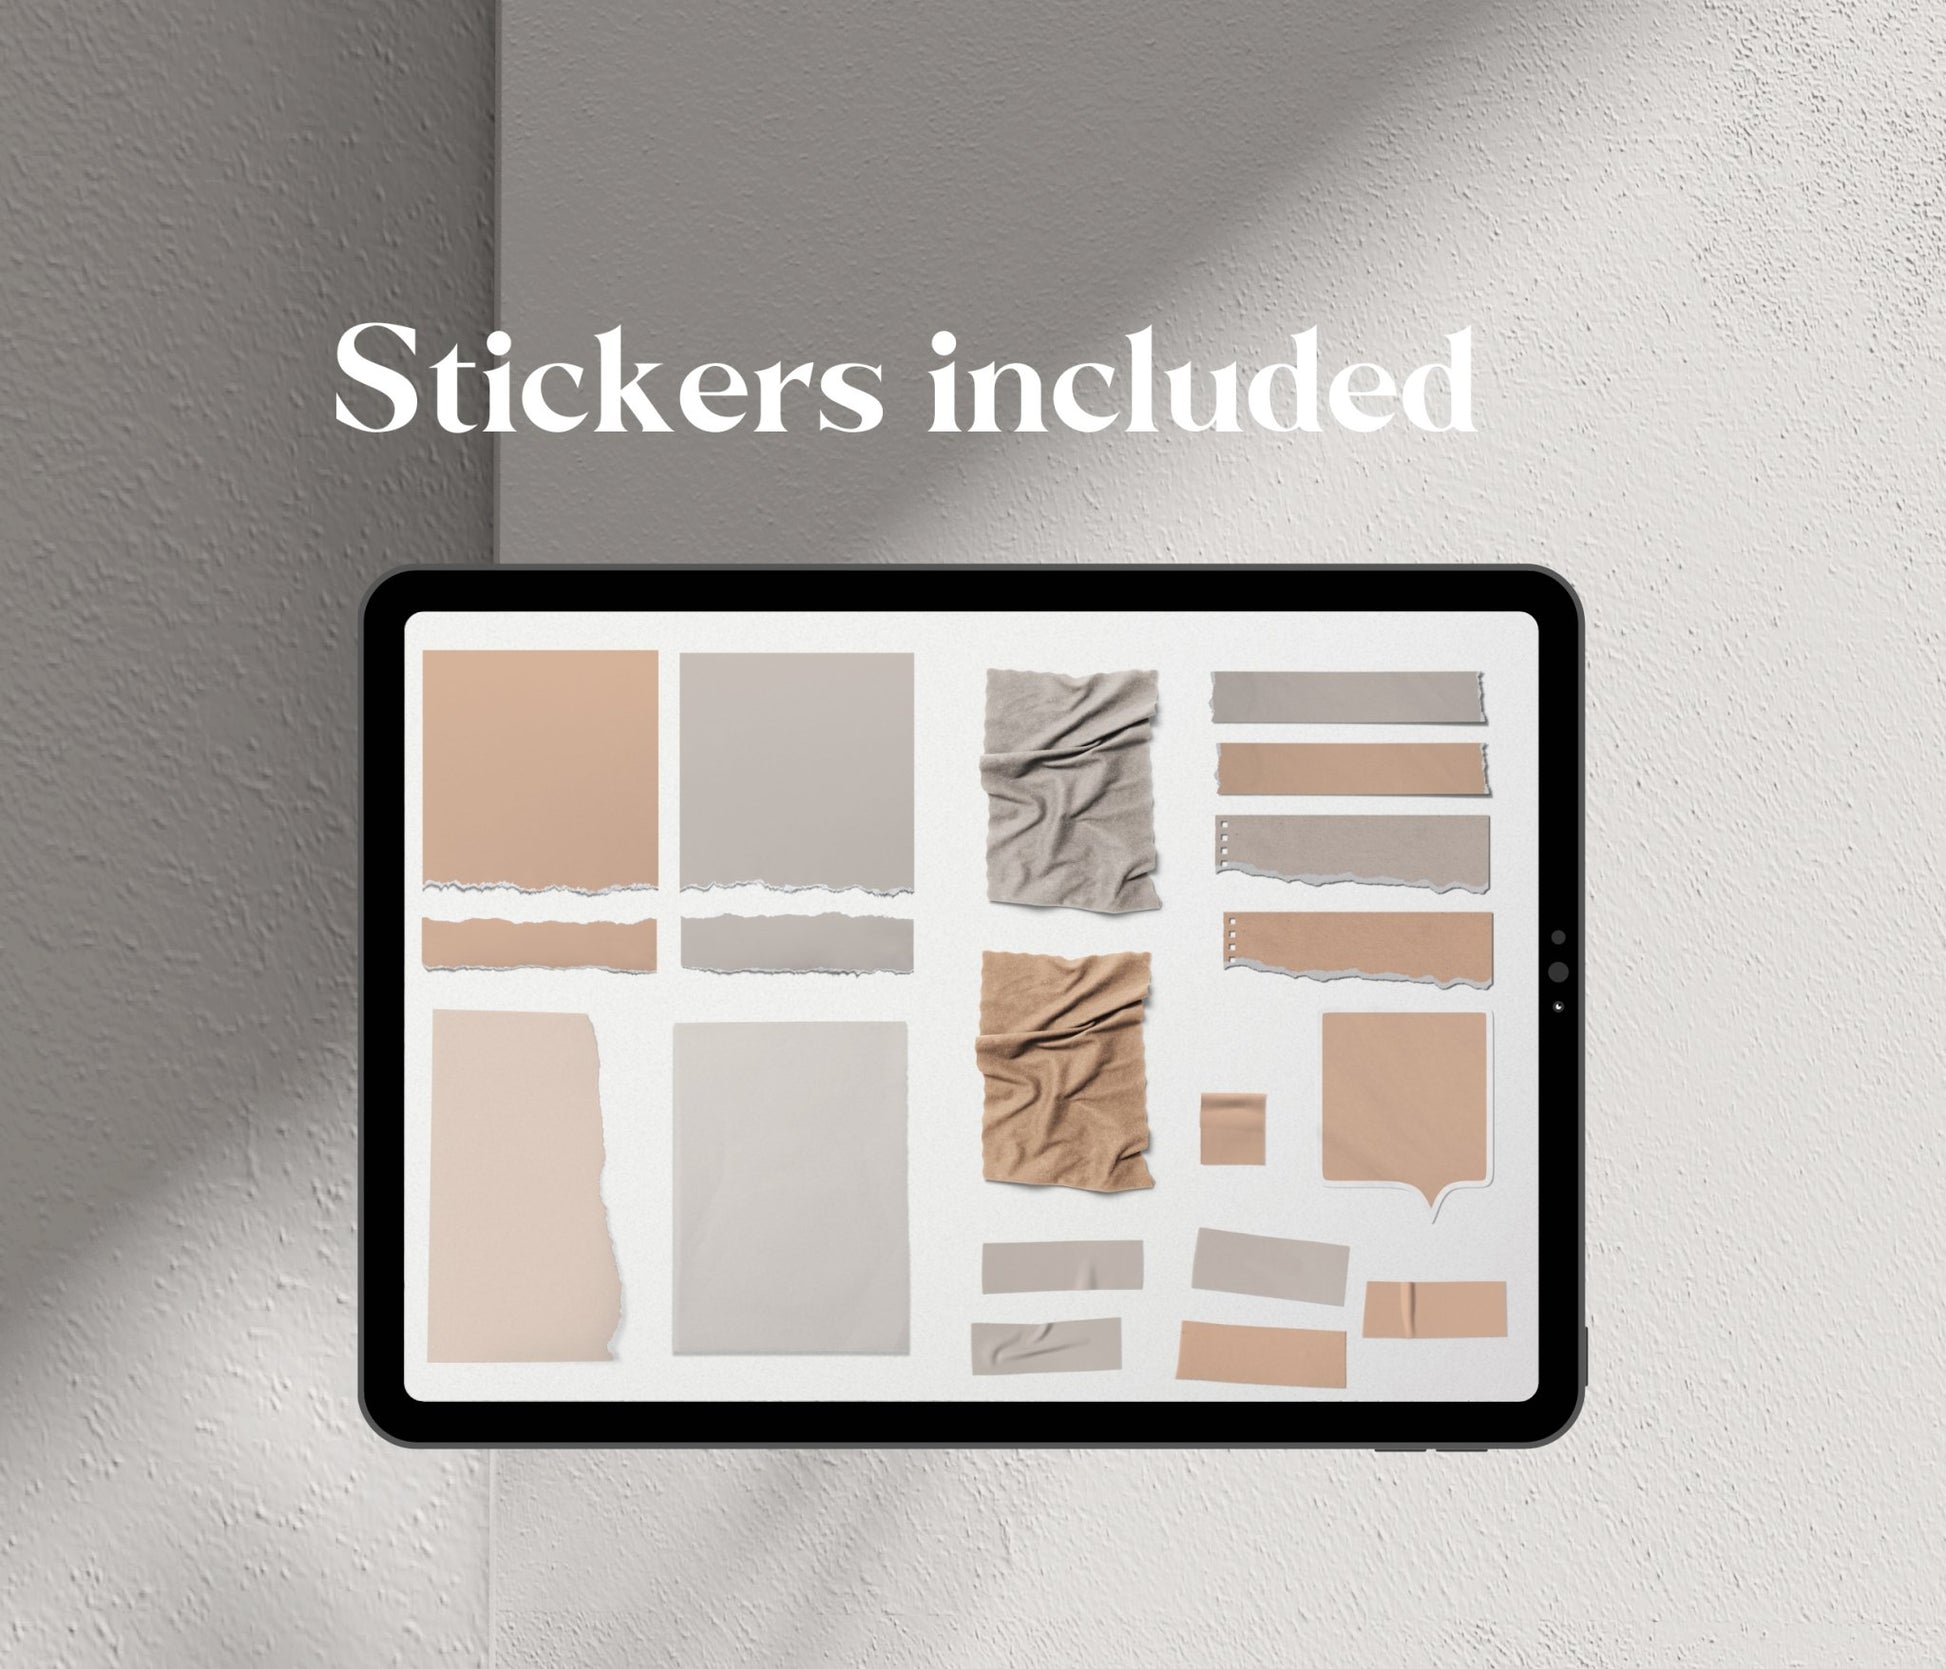 Mood Board Sticker Kit Vol 2 - Ware of Stockholm